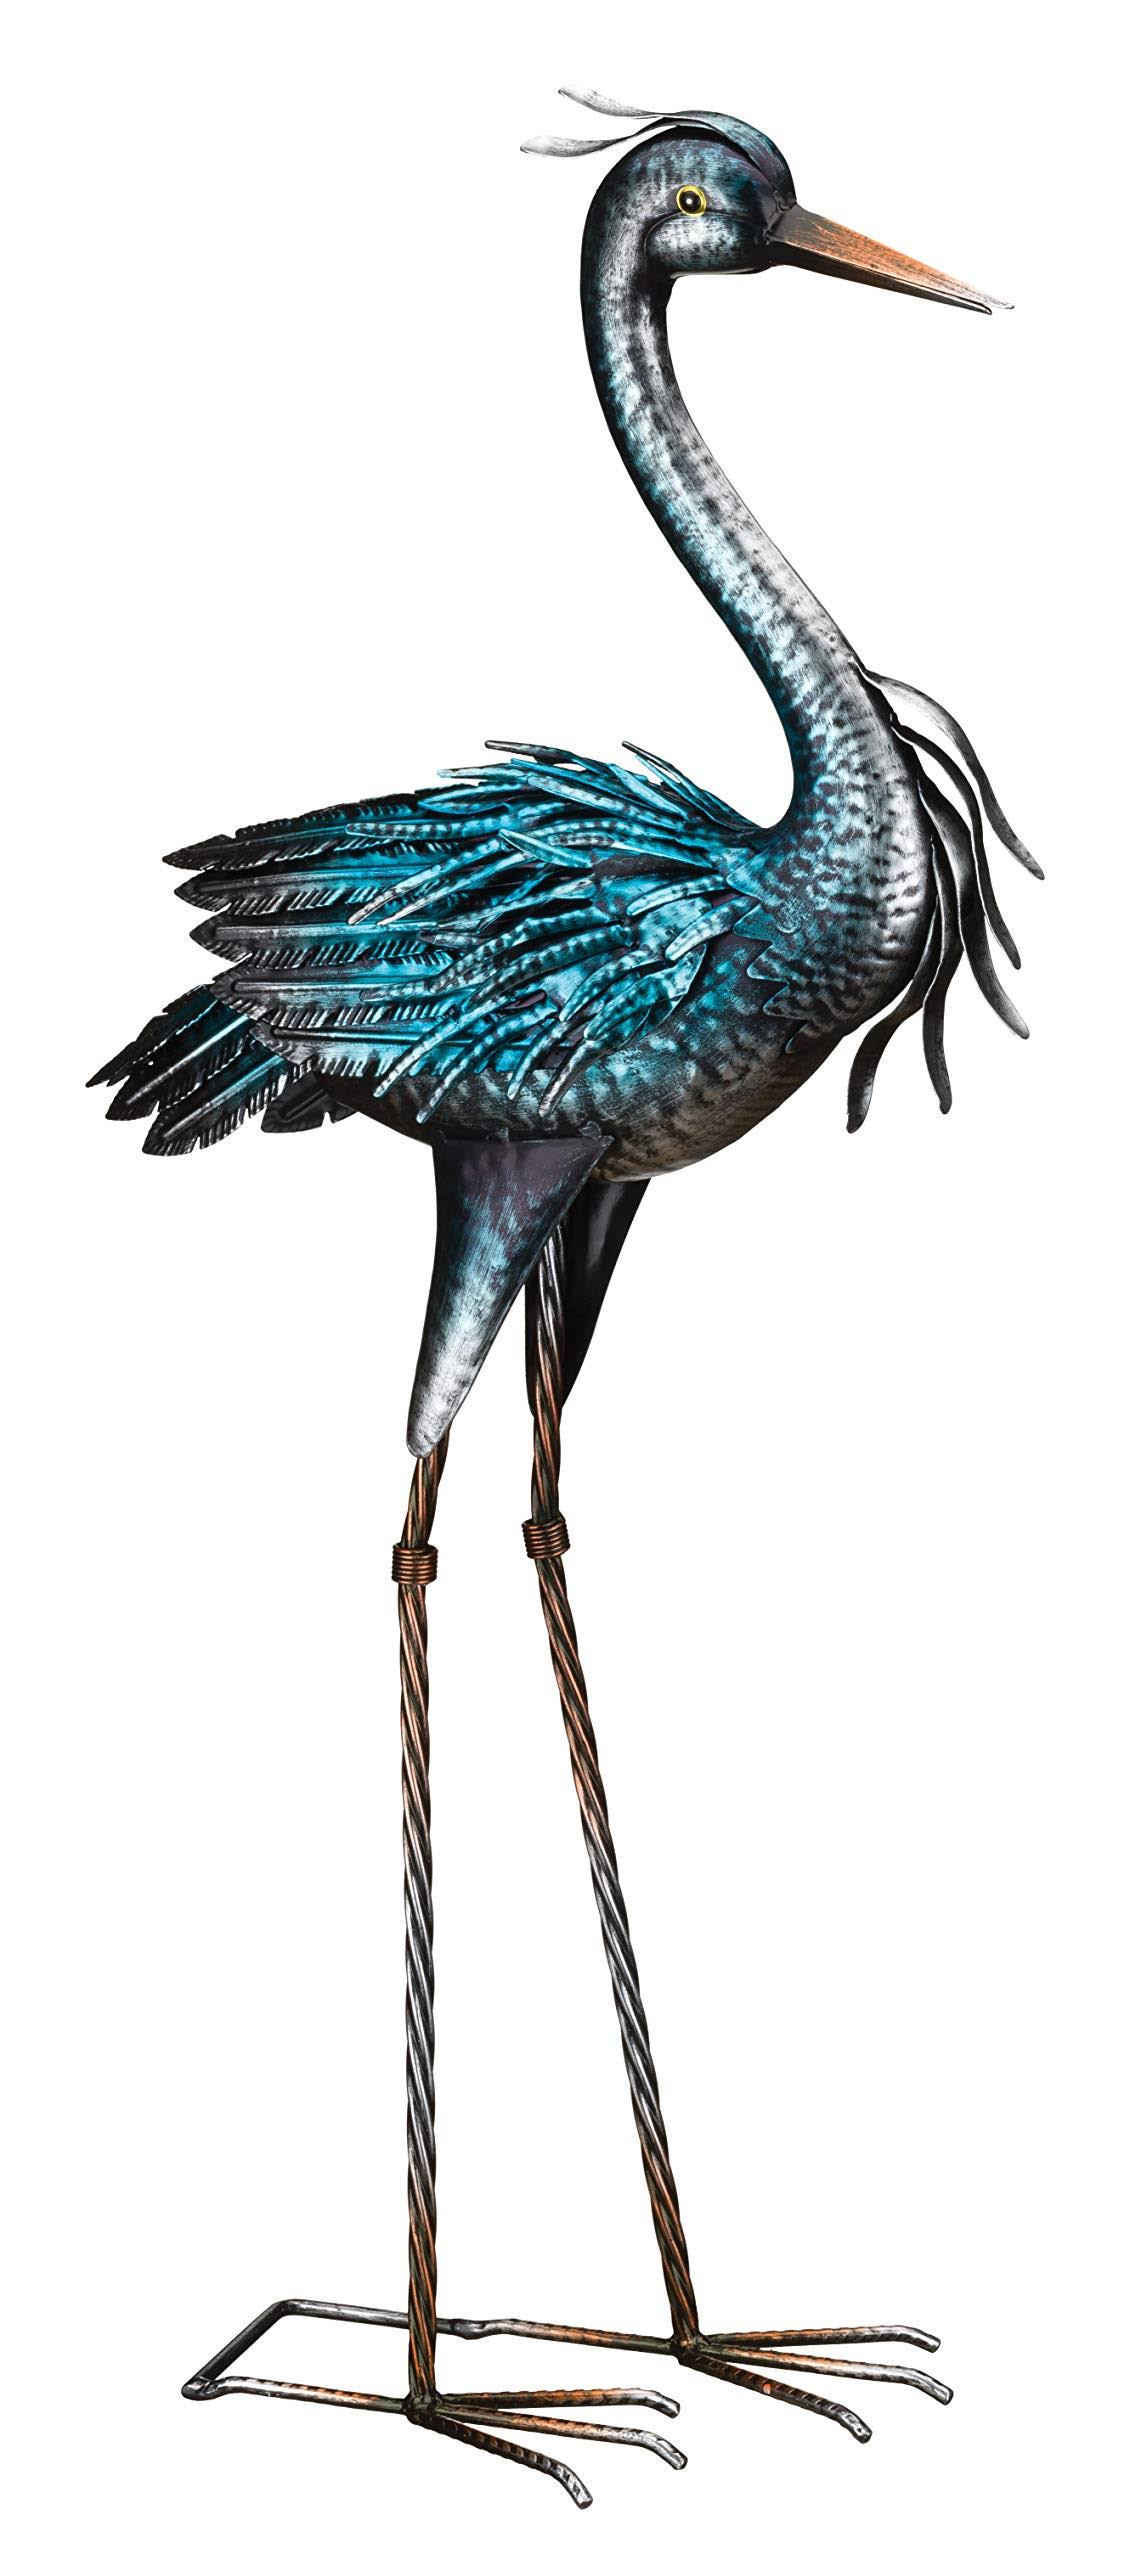 Regal Art & Gift Iridescent Heron Decor - Up